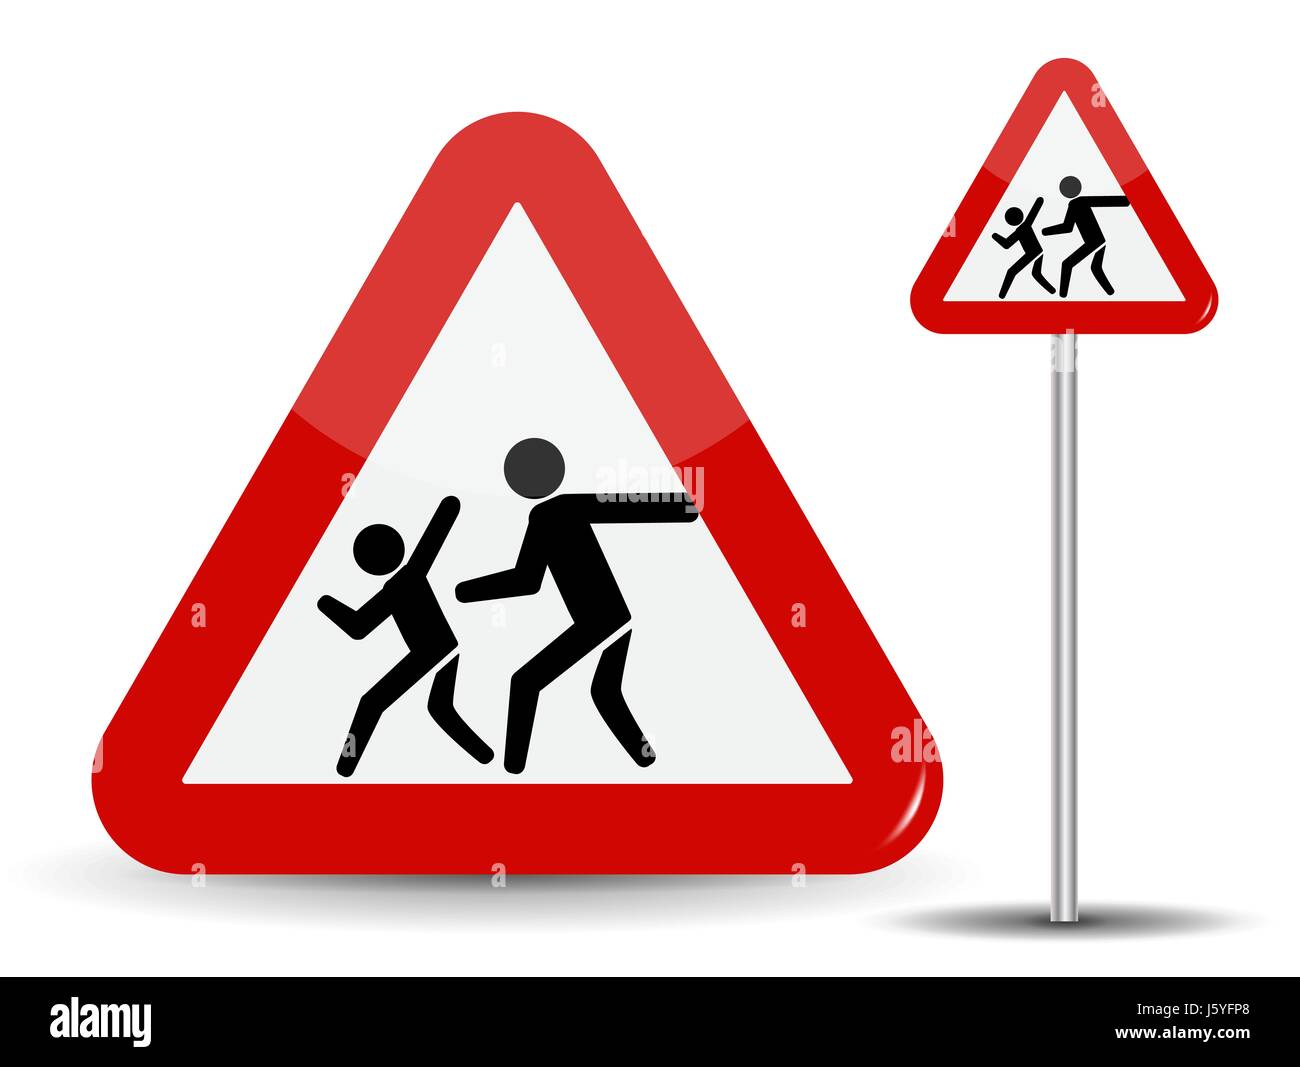 Road sign Warning les enfants. Dans le triangle rouge tournant les enfants. Vector Illustration. Illustration de Vecteur